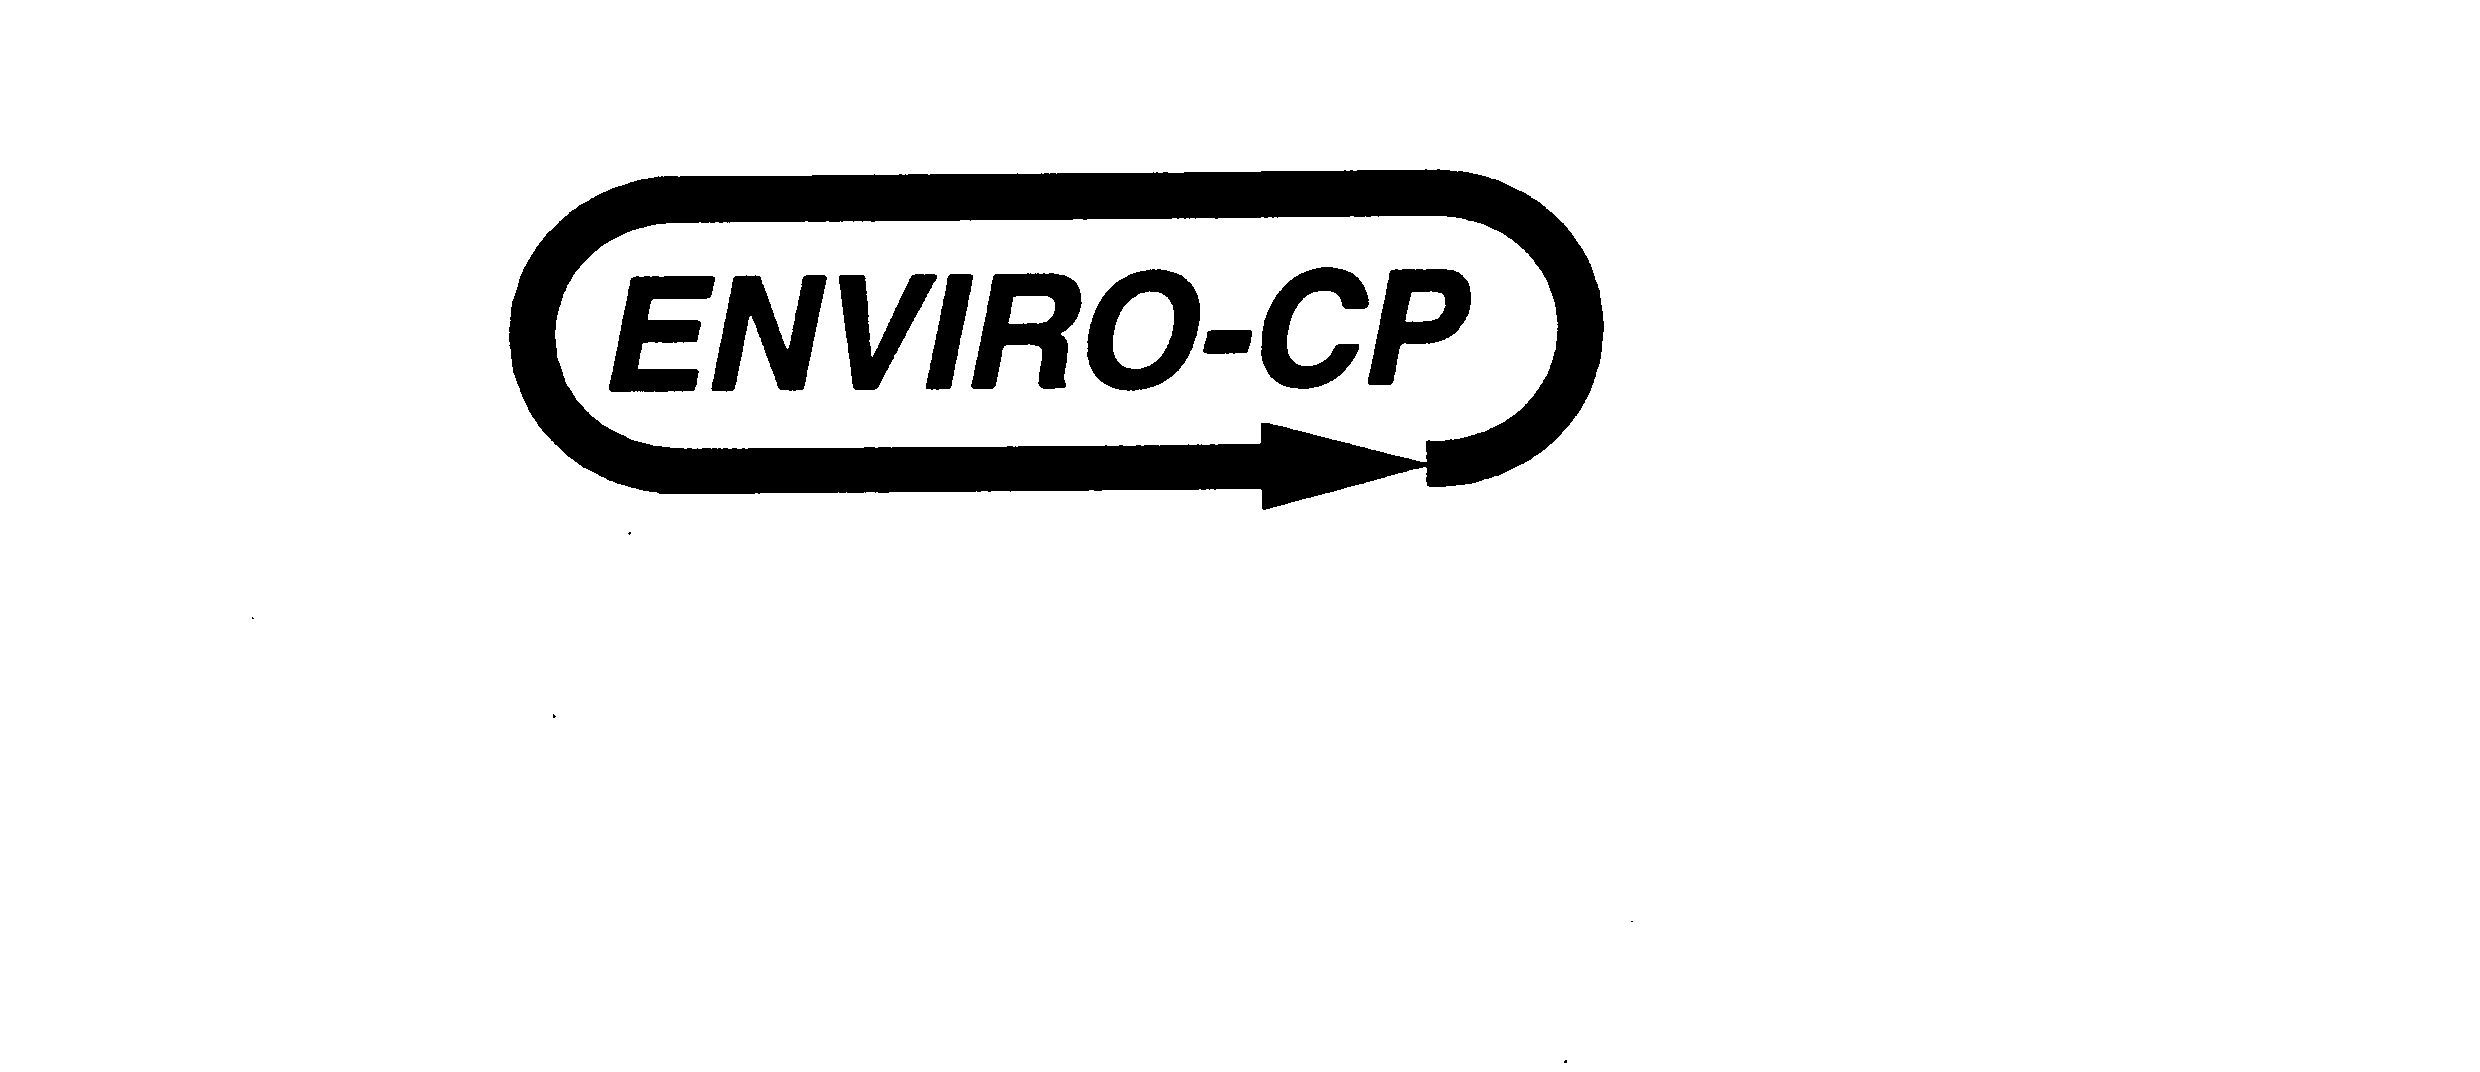  ENVIRO-CP